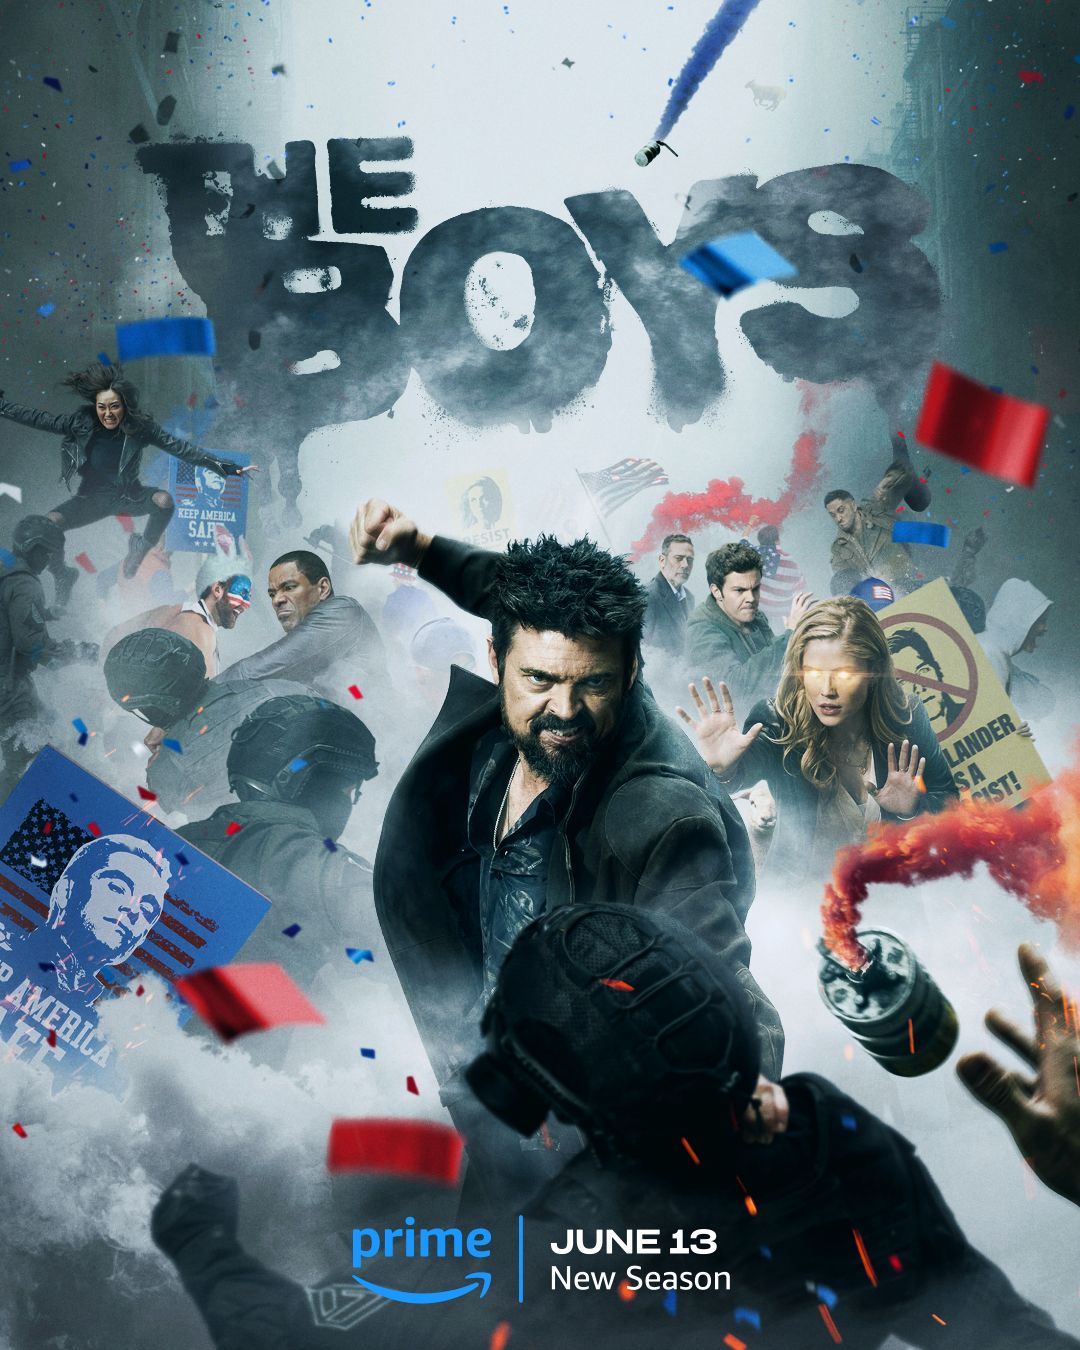 Karl Urban, Jack Quaid, Karen Fukuhara, Tomer Capone, Laz Alonso, and Jeffrey Dean Morgan on the poster for The Boys Season 4.